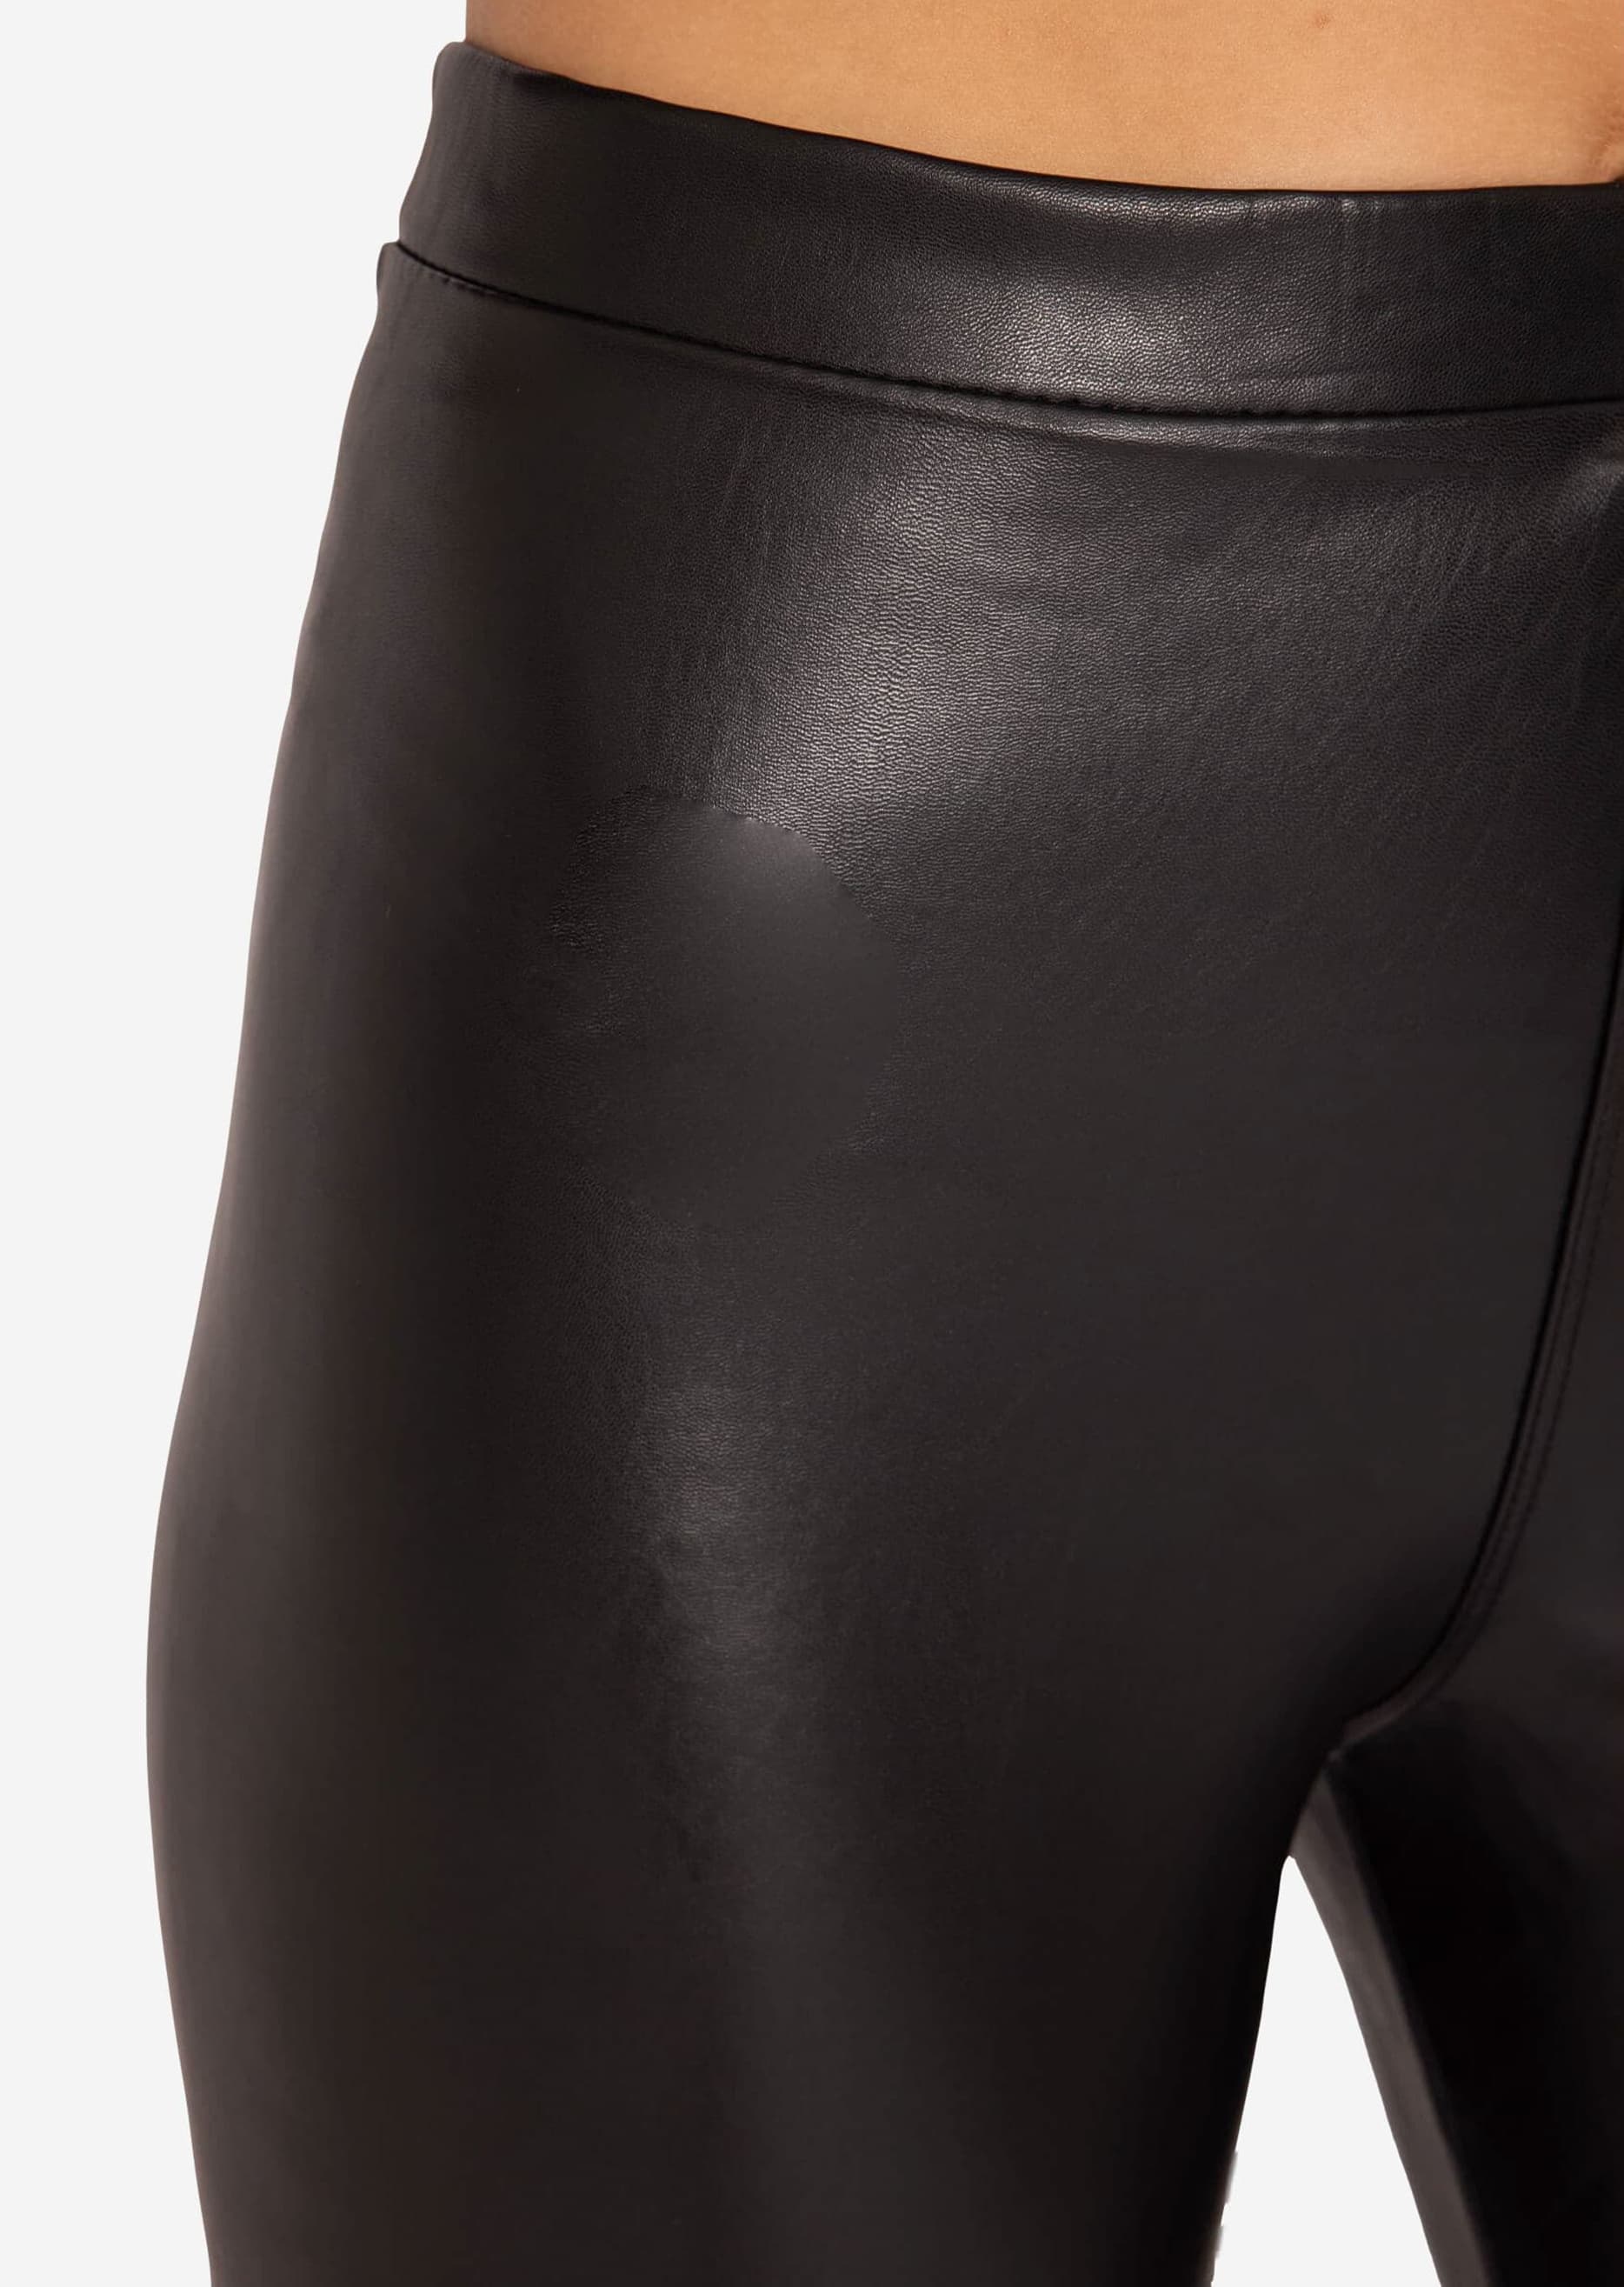 Calzedonia Leggings - Trousers - schwarz/black 